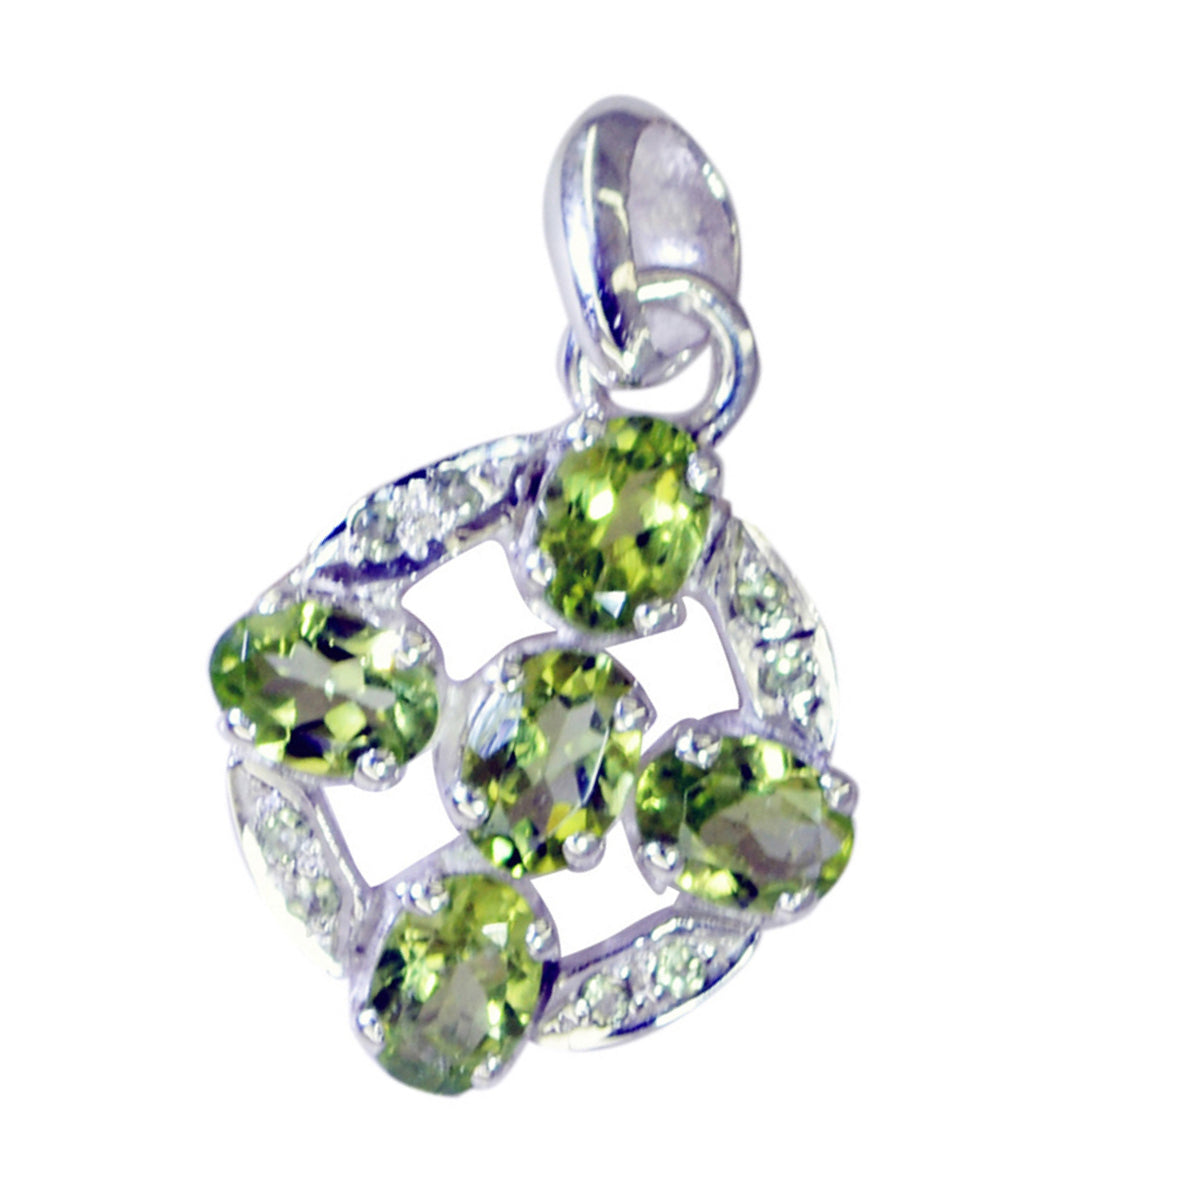 Riyo Delightful Gemstone Oval Faceted Green Peridot 1116 Sterling Silver Pendant Gift For Girlfriend